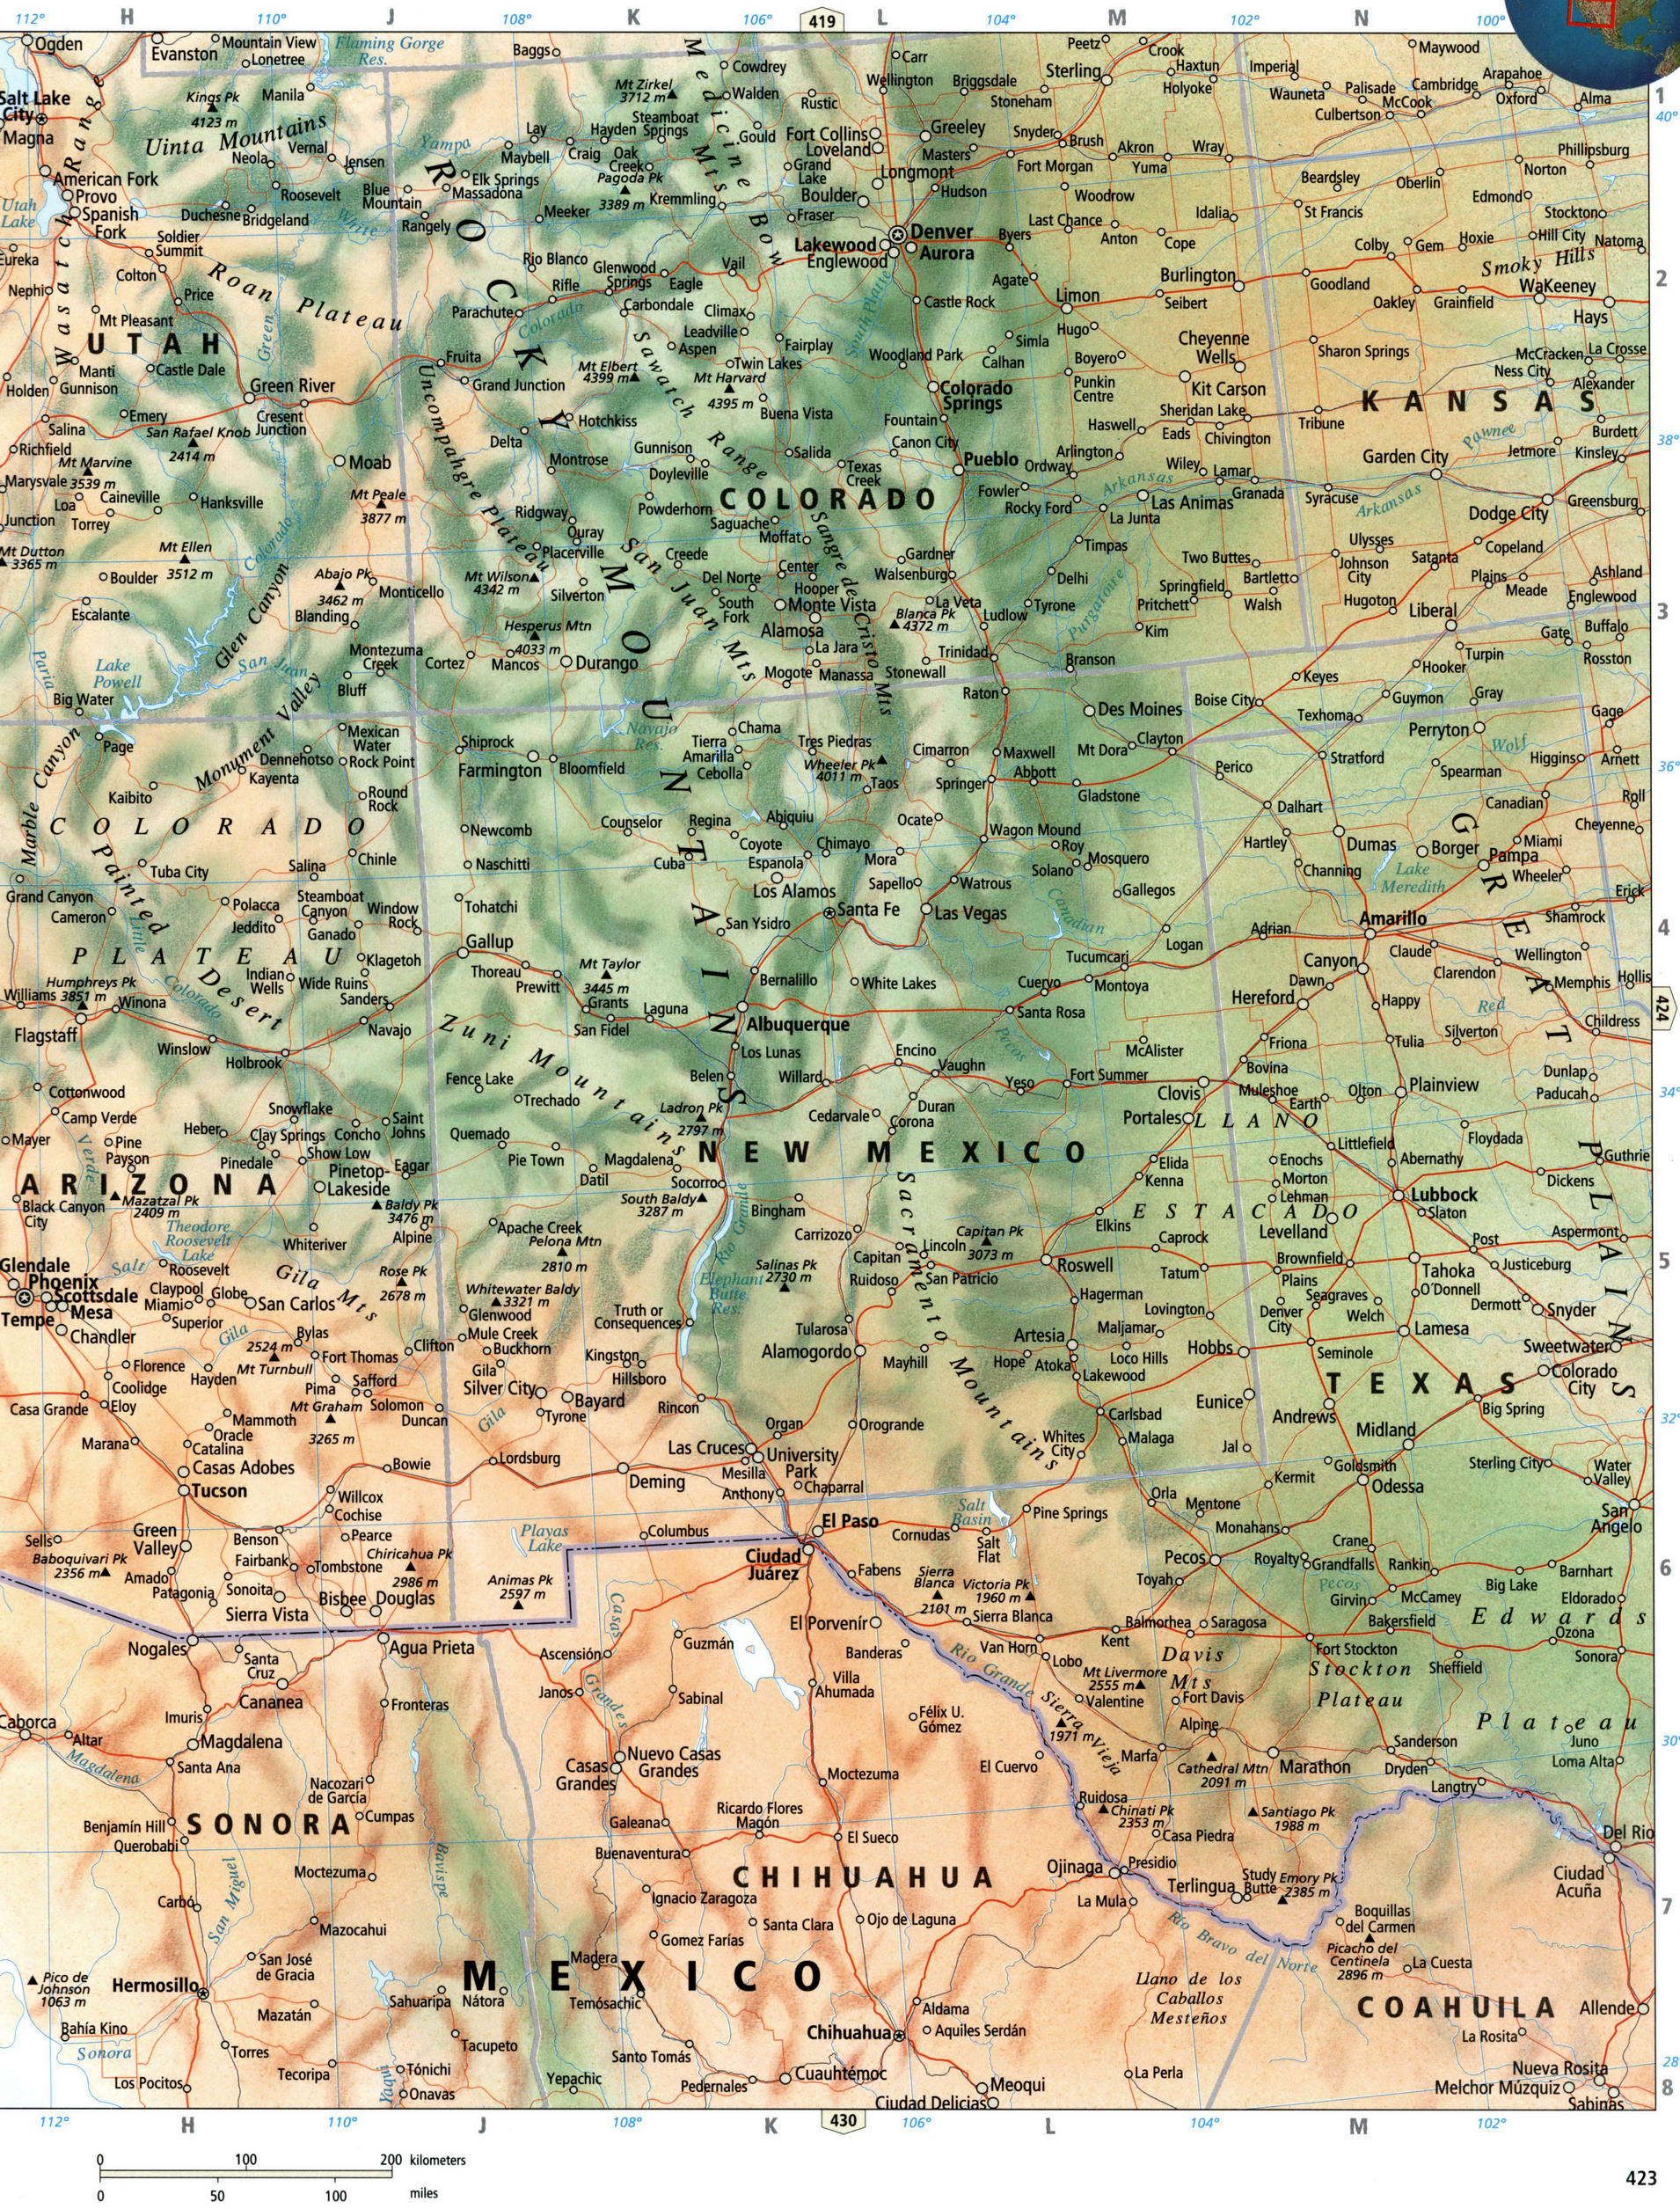 Arizona and Colorado map